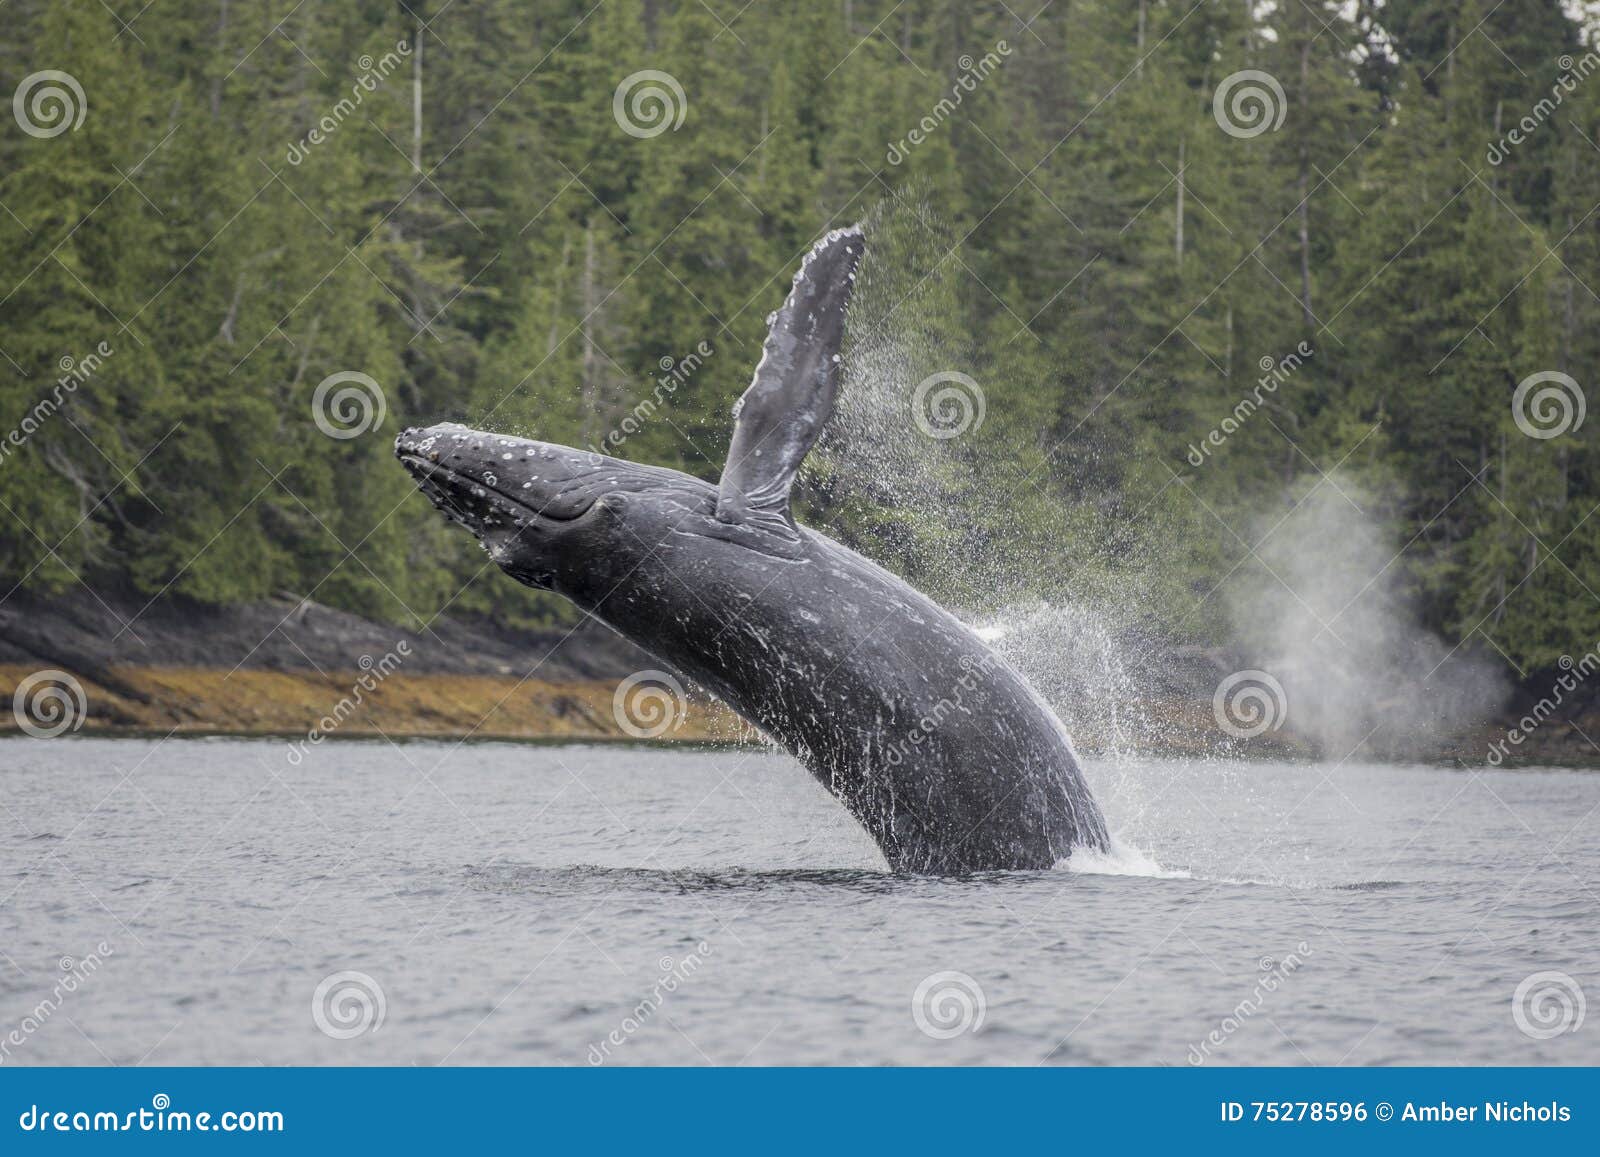 humpback whale breaching offshore at craig, alaska